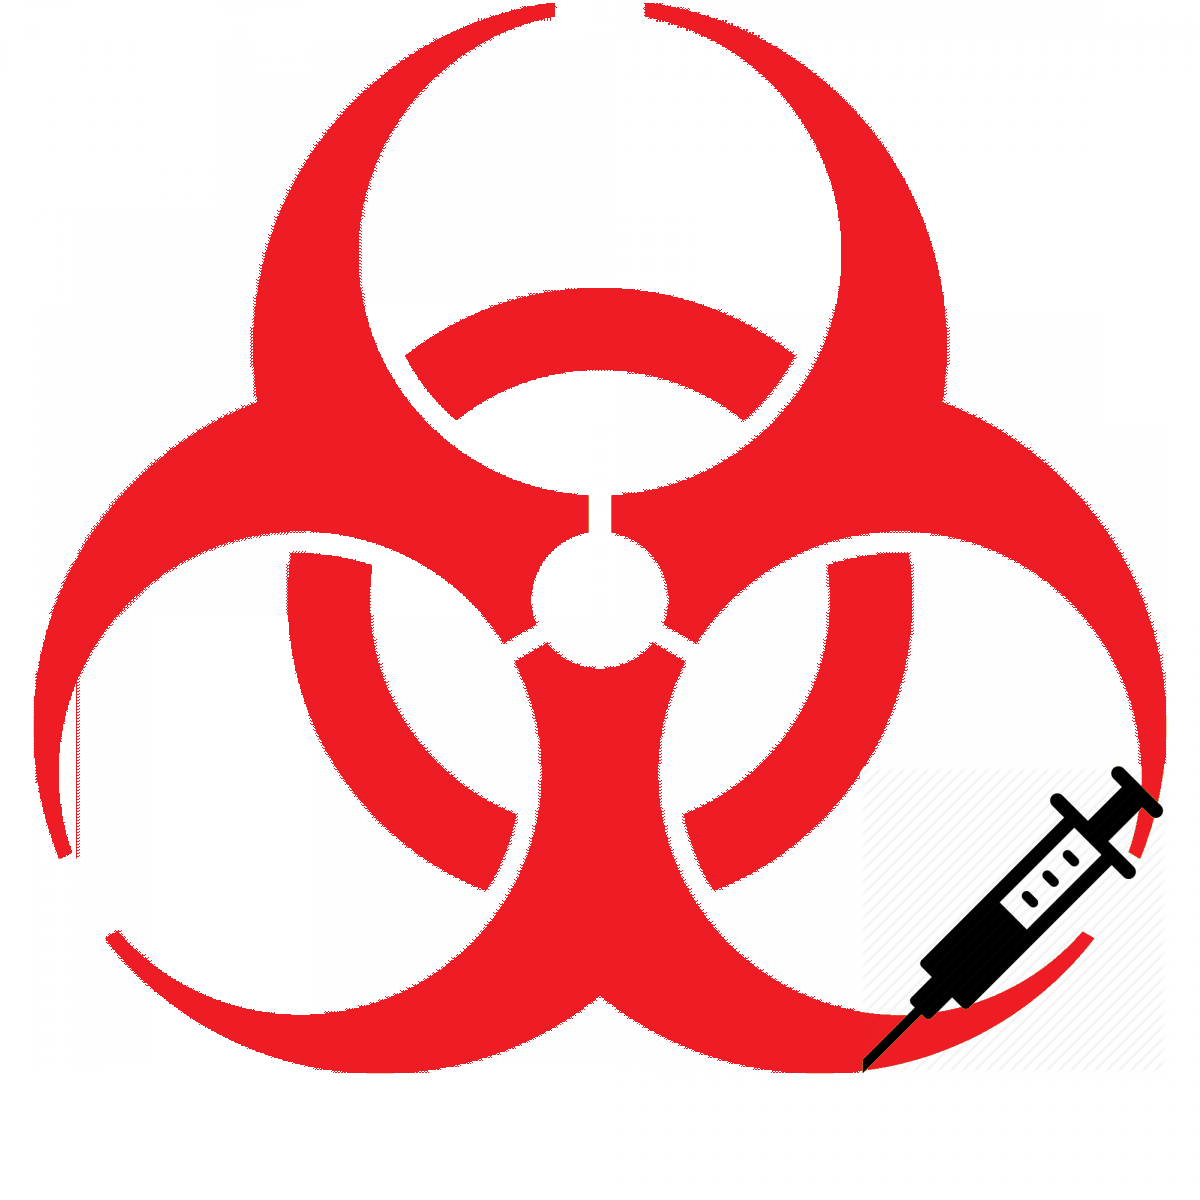 poison clipart hazardous chemical